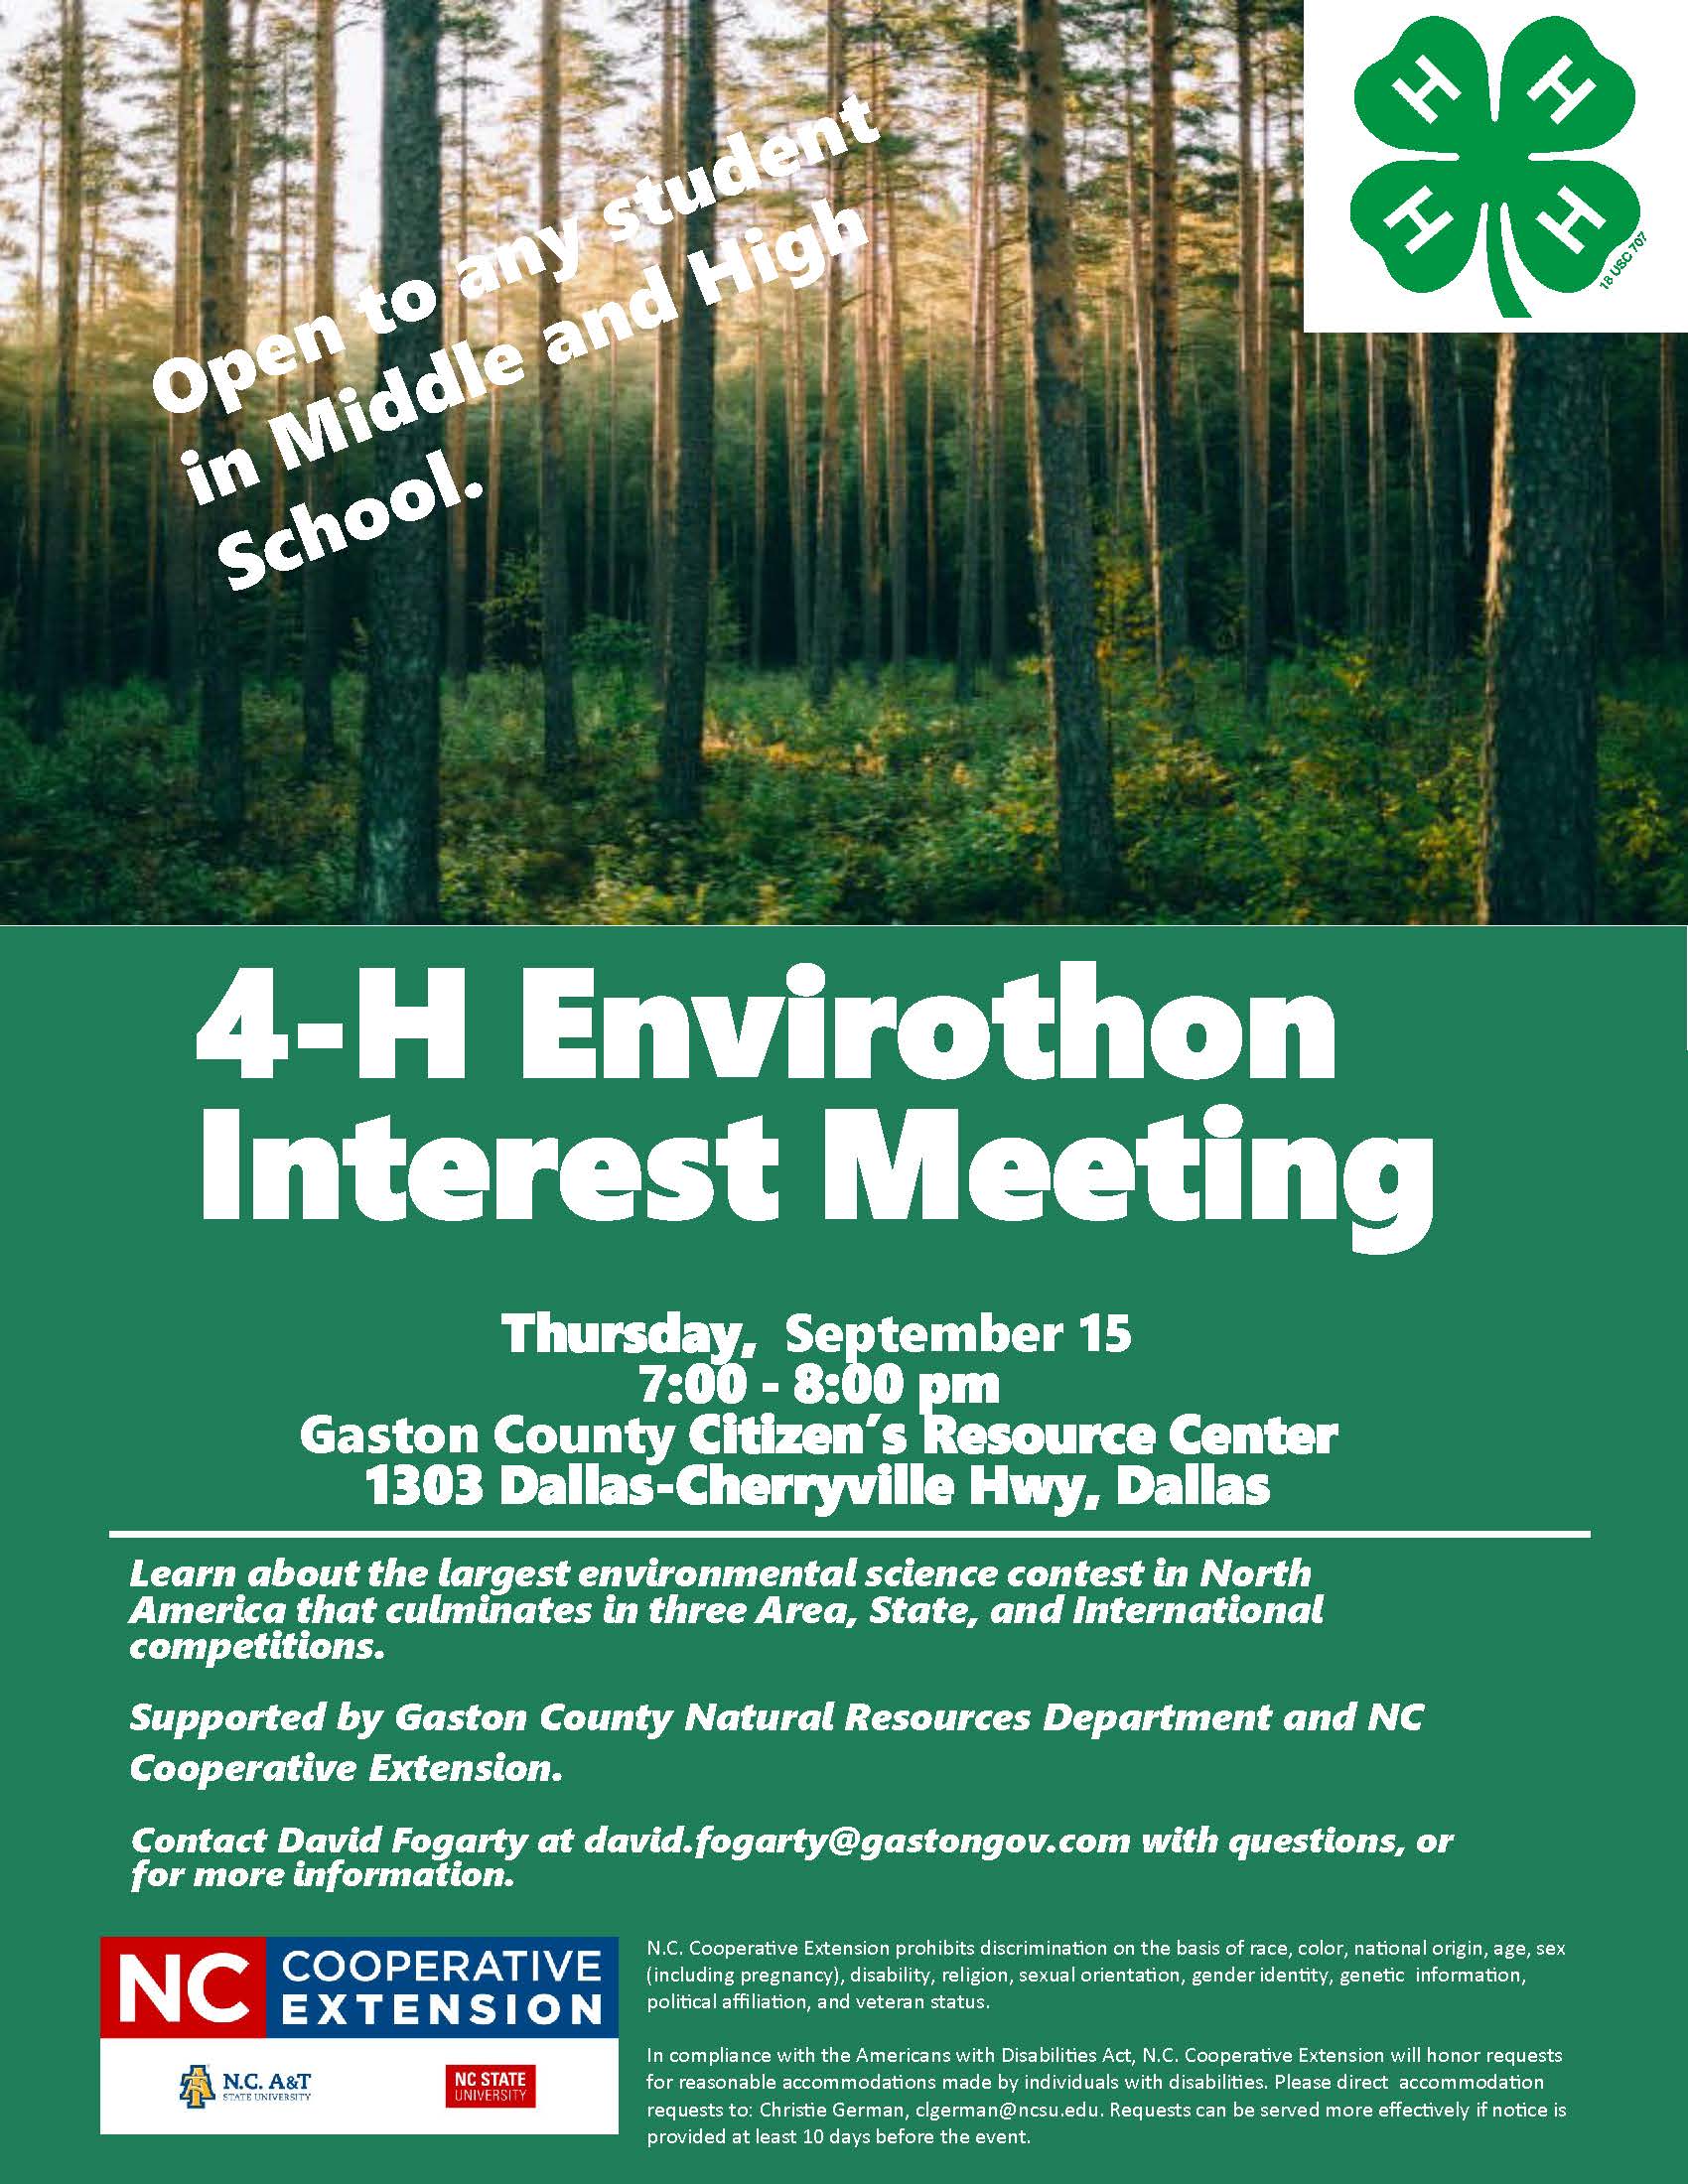 4-H Envirothon Interest Meeting Flyer for Gaston County